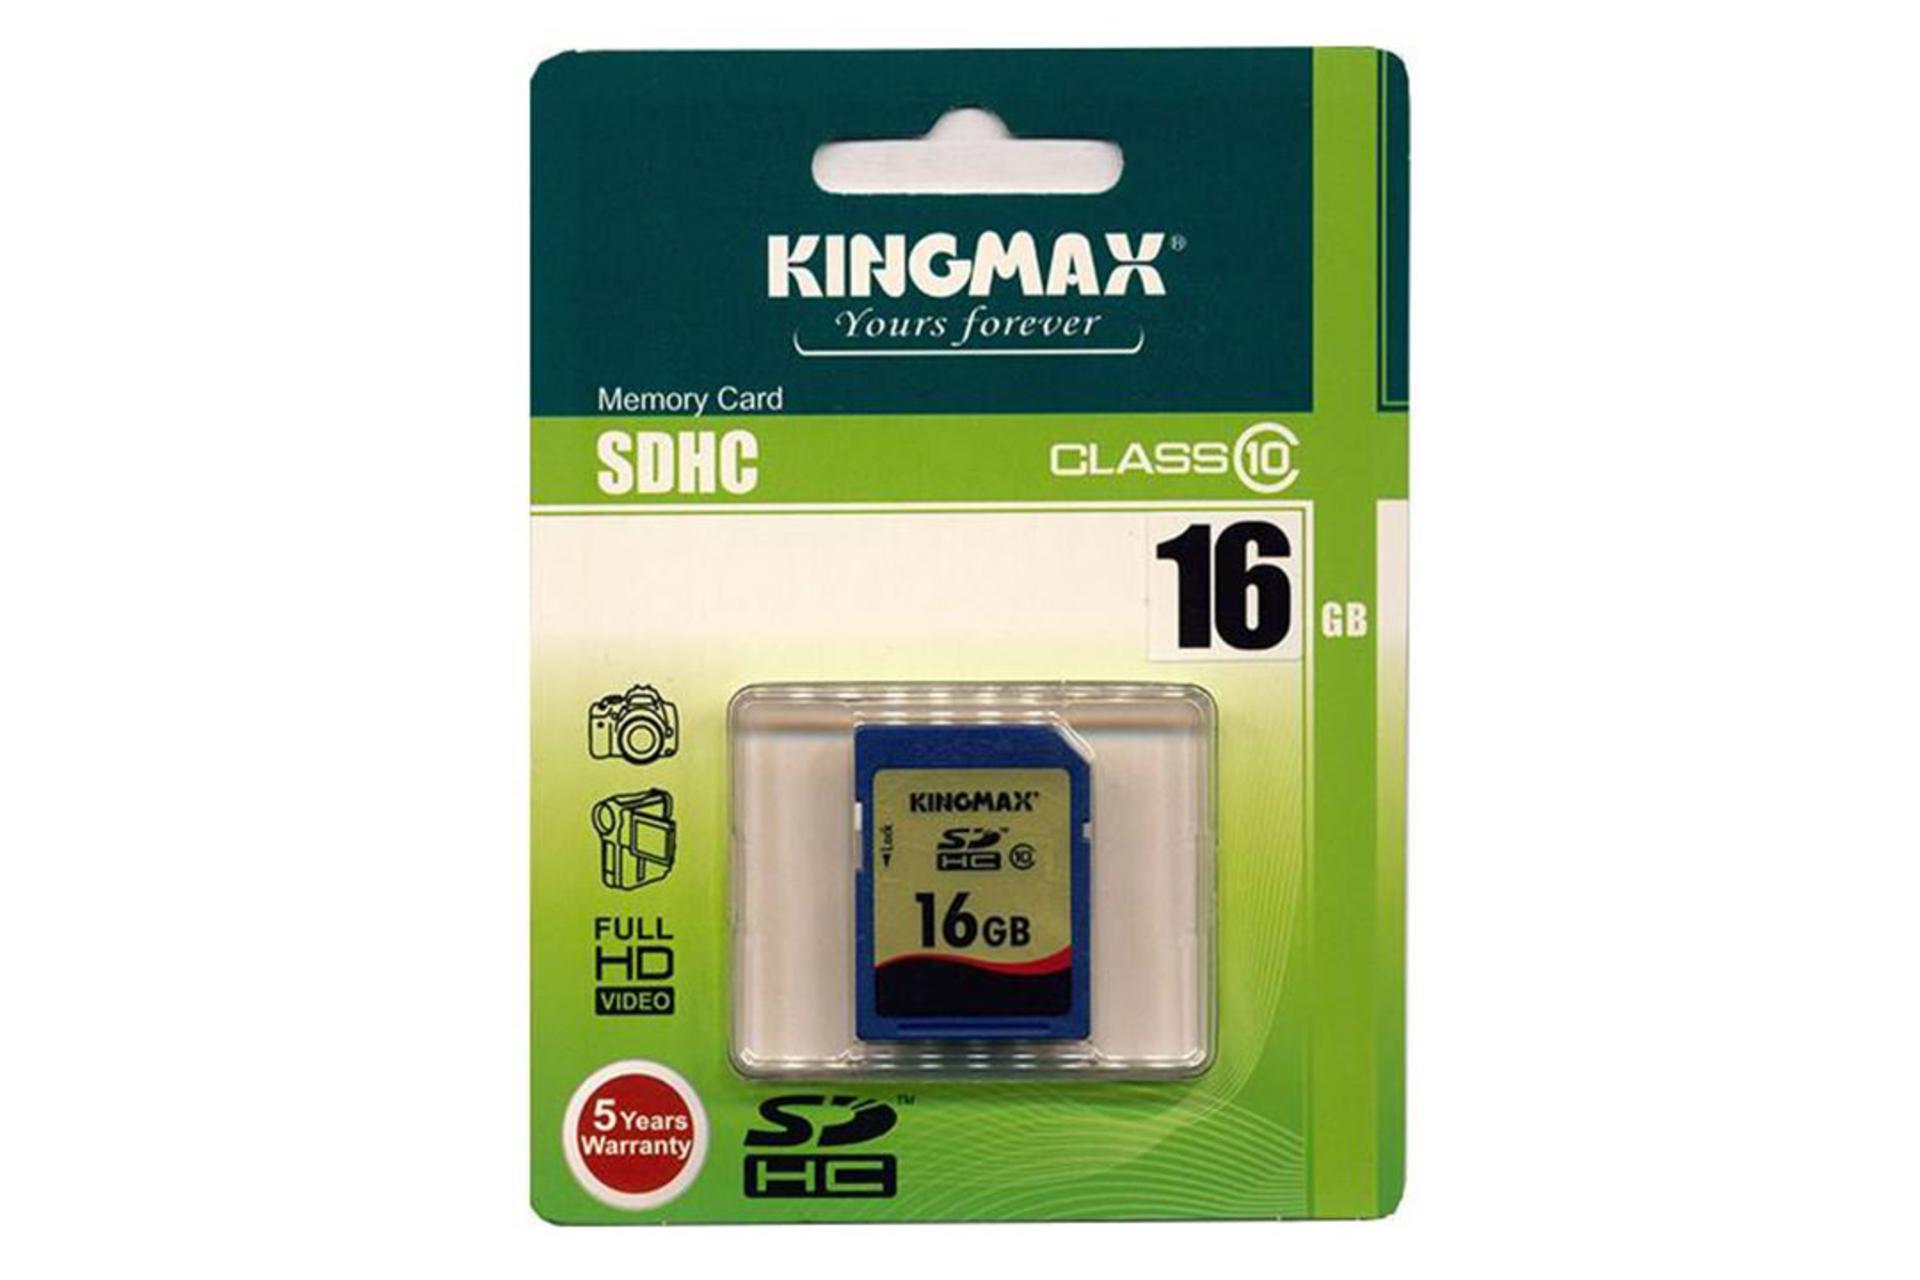 Kingmax SDHC Class 10 16GB